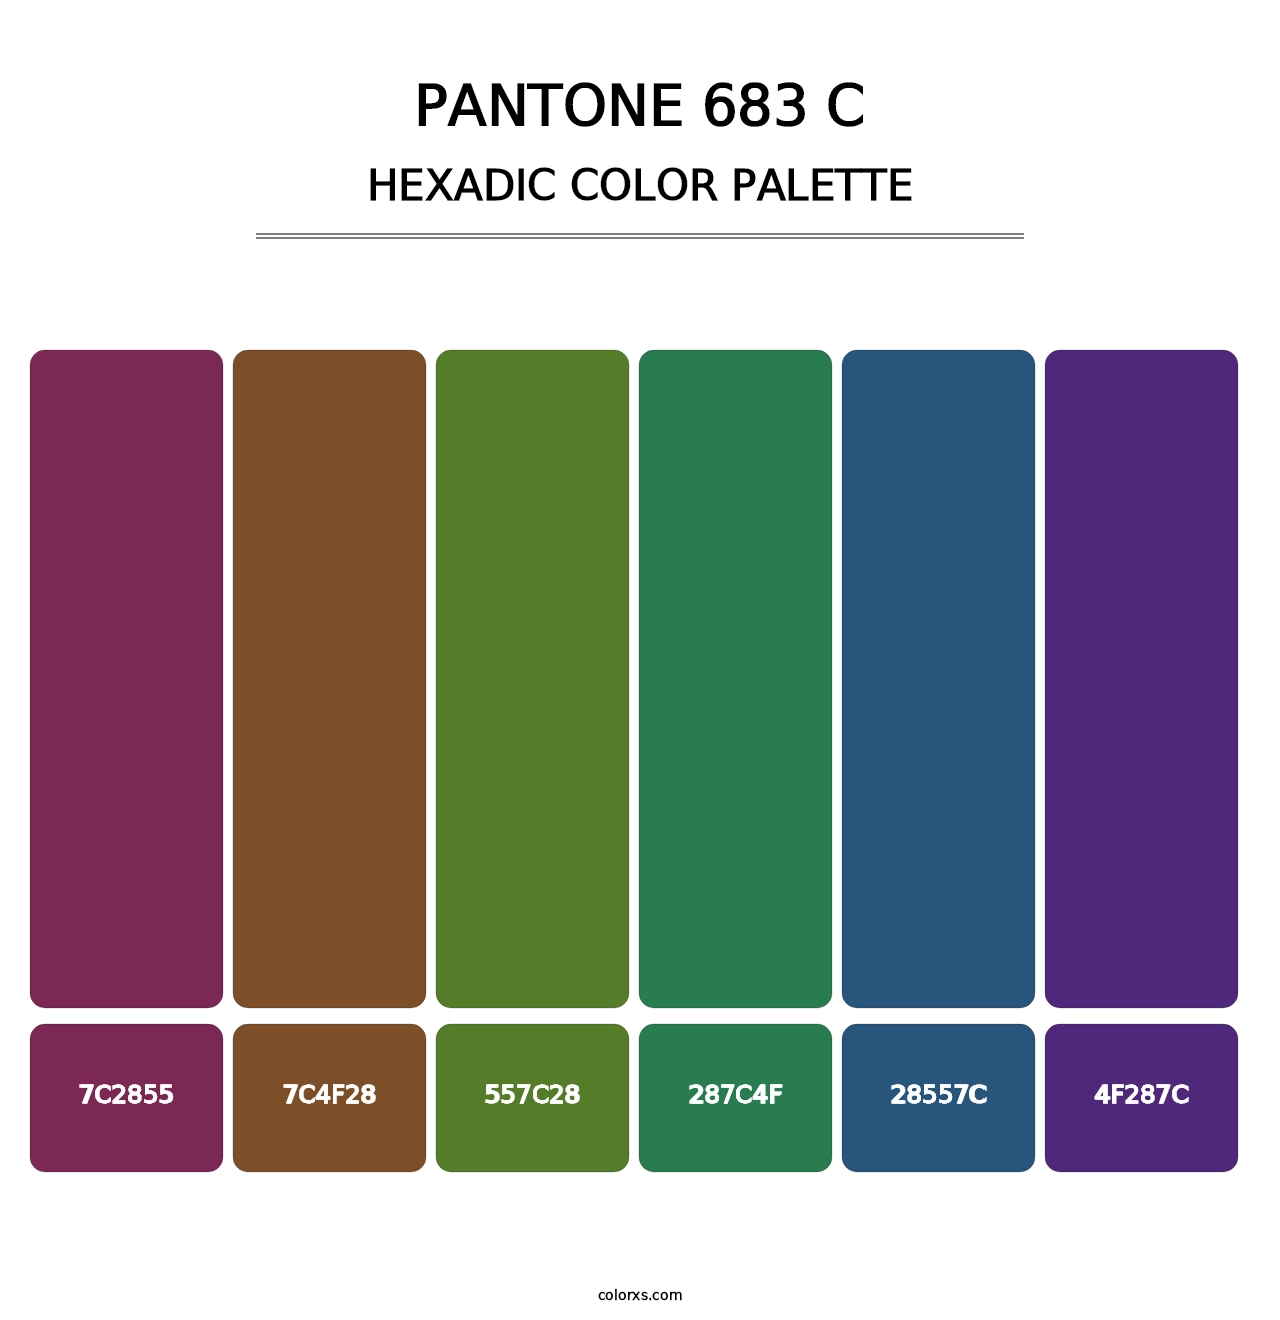 PANTONE 683 C - Hexadic Color Palette